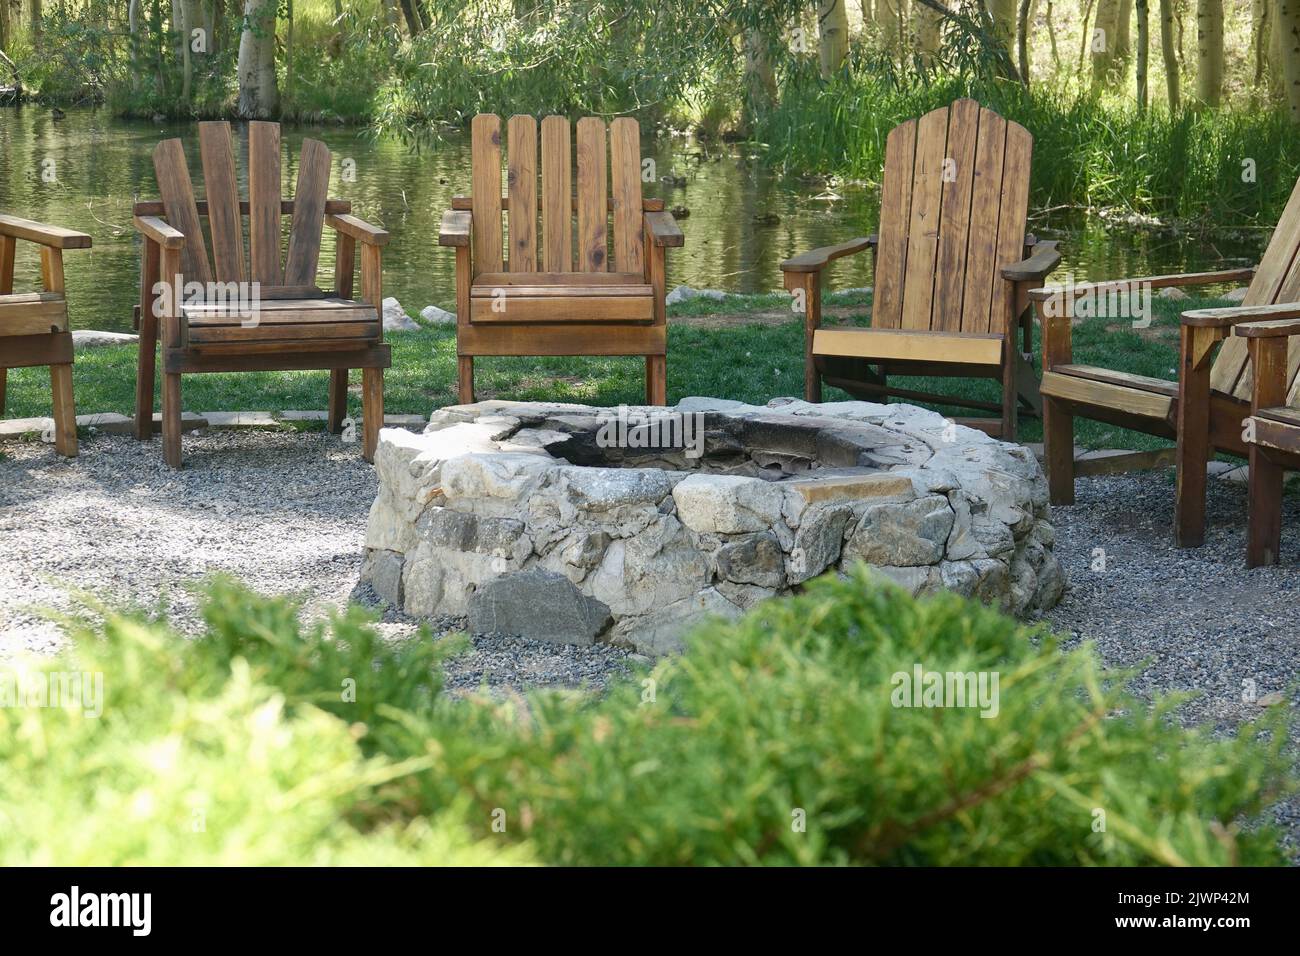 circle of Adirondack chairs around the fire pit Stock Photo